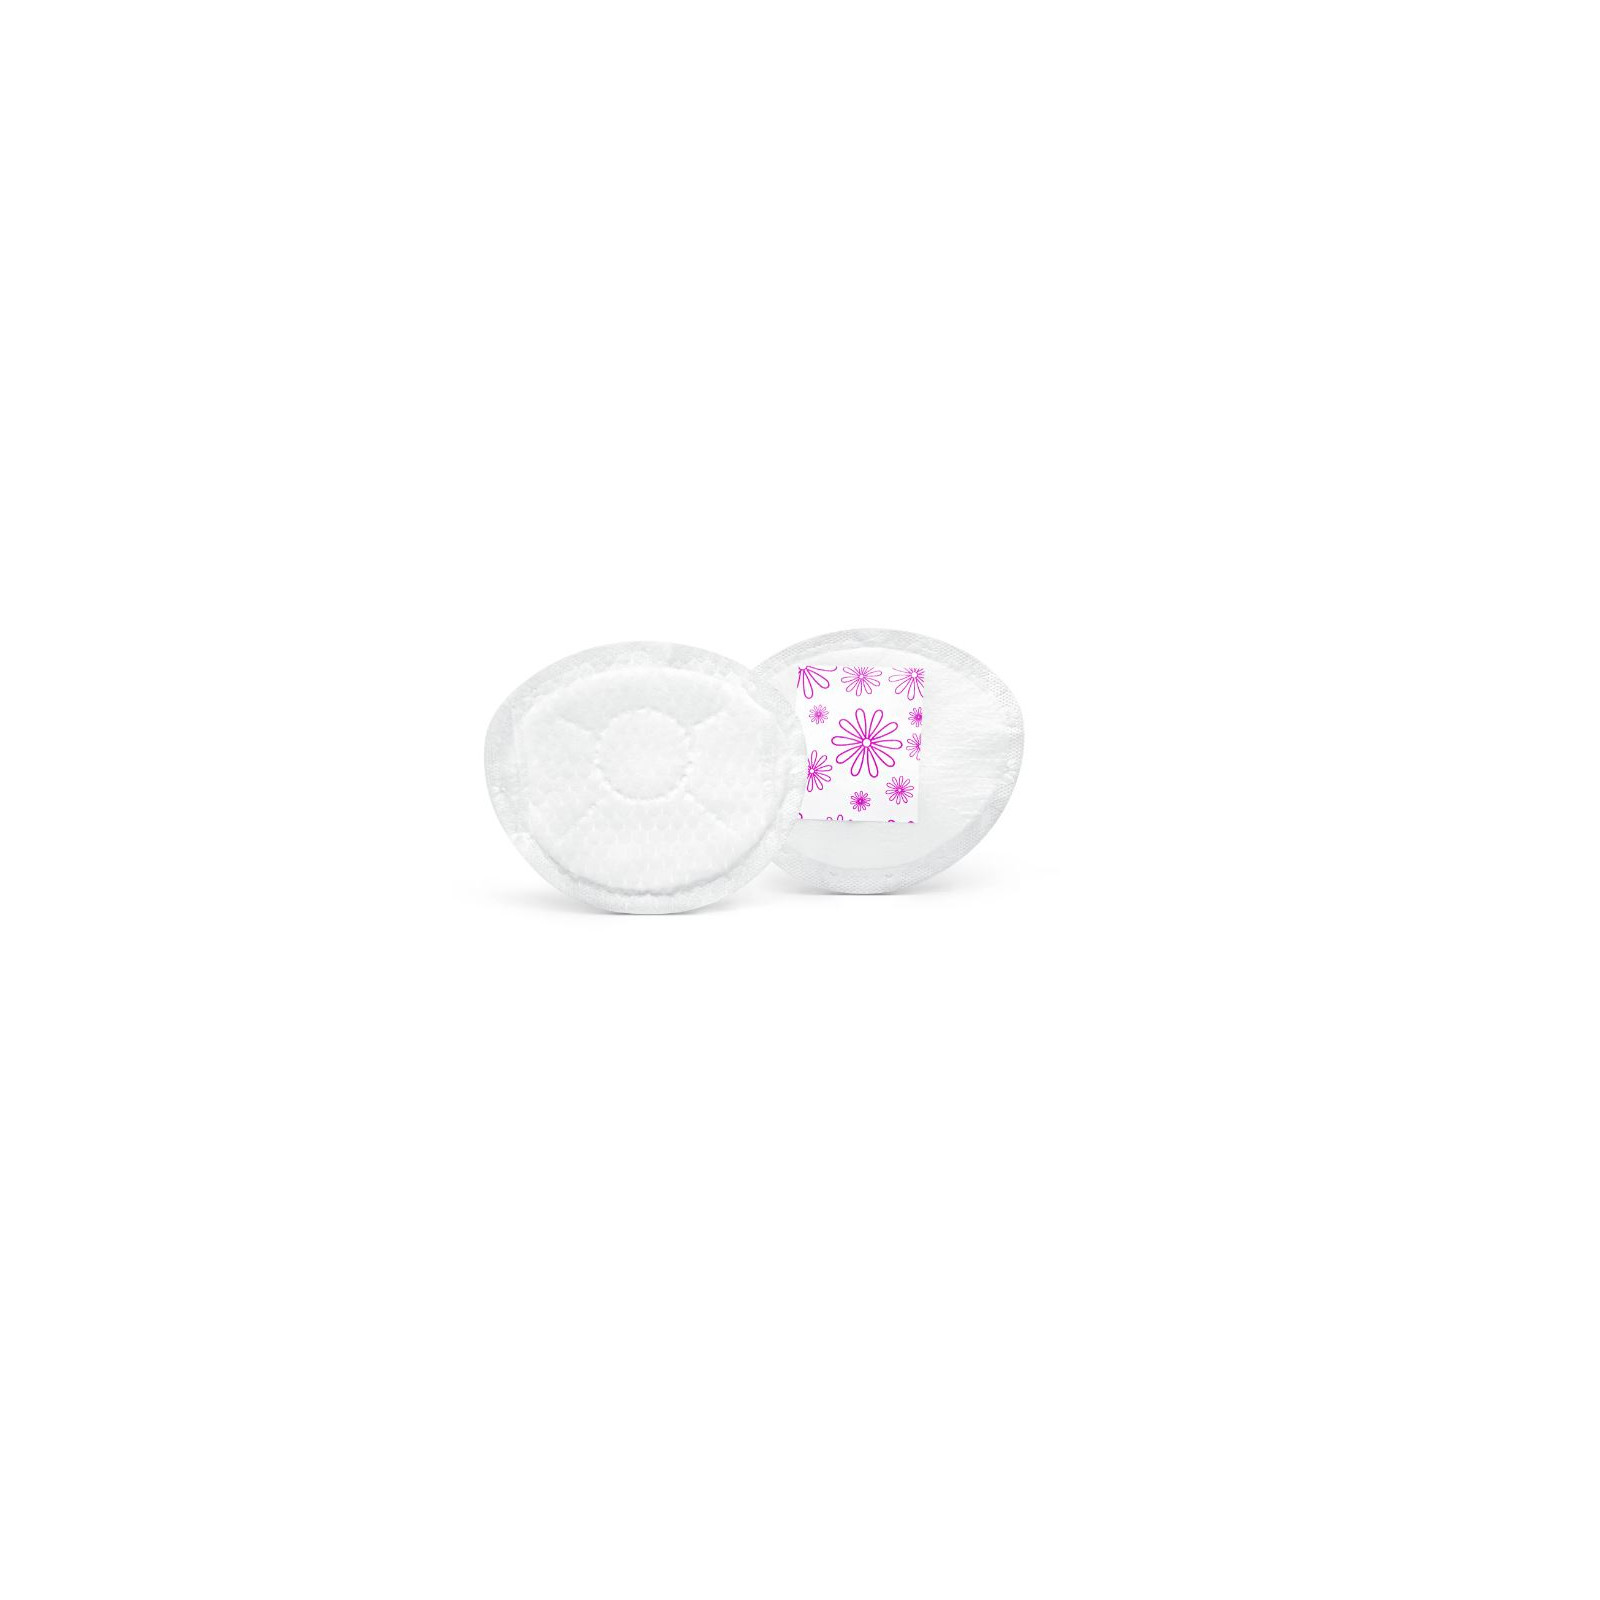 Medela Safe & Dry Ultra Thin Disposable Nursing Pads, 240 Count Breast Pads  for Breastfeeding, Leakproof Design, Slender and Contoured for Optimal Fit